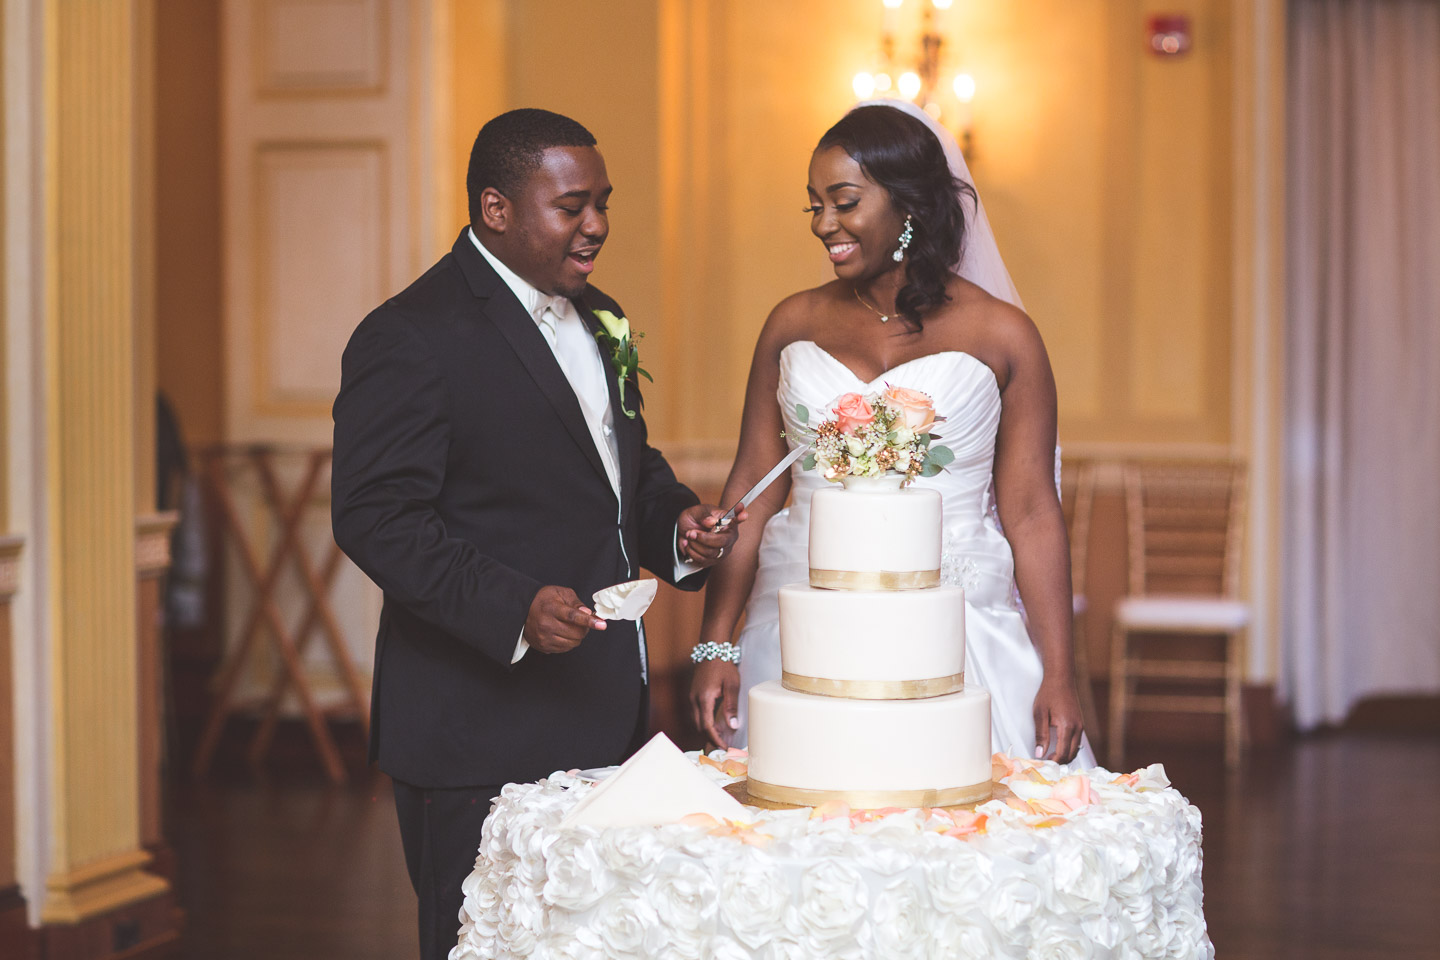 Detroit-Michigan-Wedding-The-Colony-Club-Reception-Cut-The-Cake-Knife-Bride-Groom